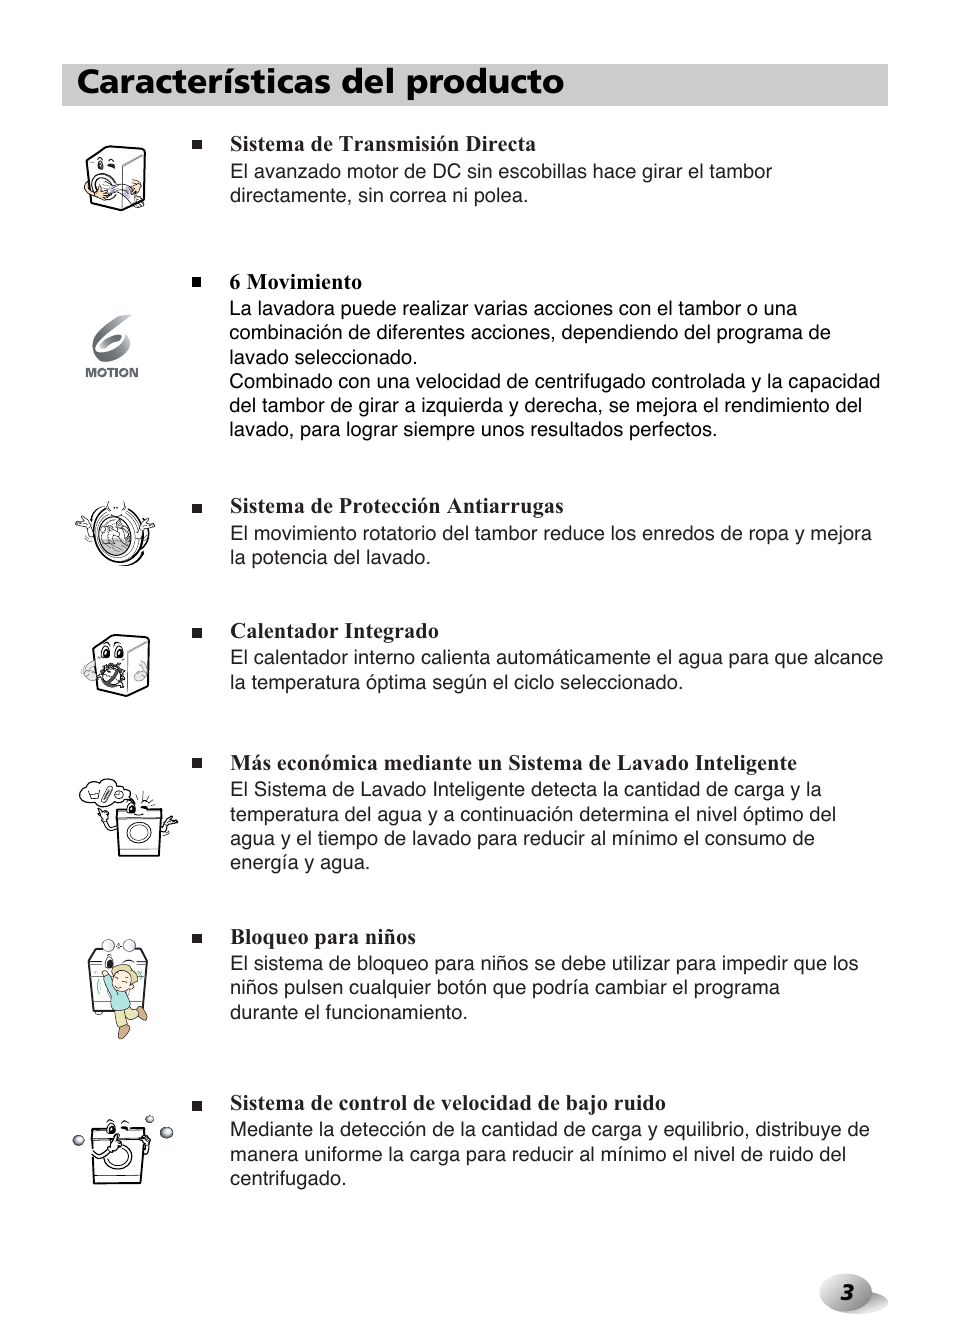 Características del producto | LG F1480TD Manual del usuario | Página 3 / 44